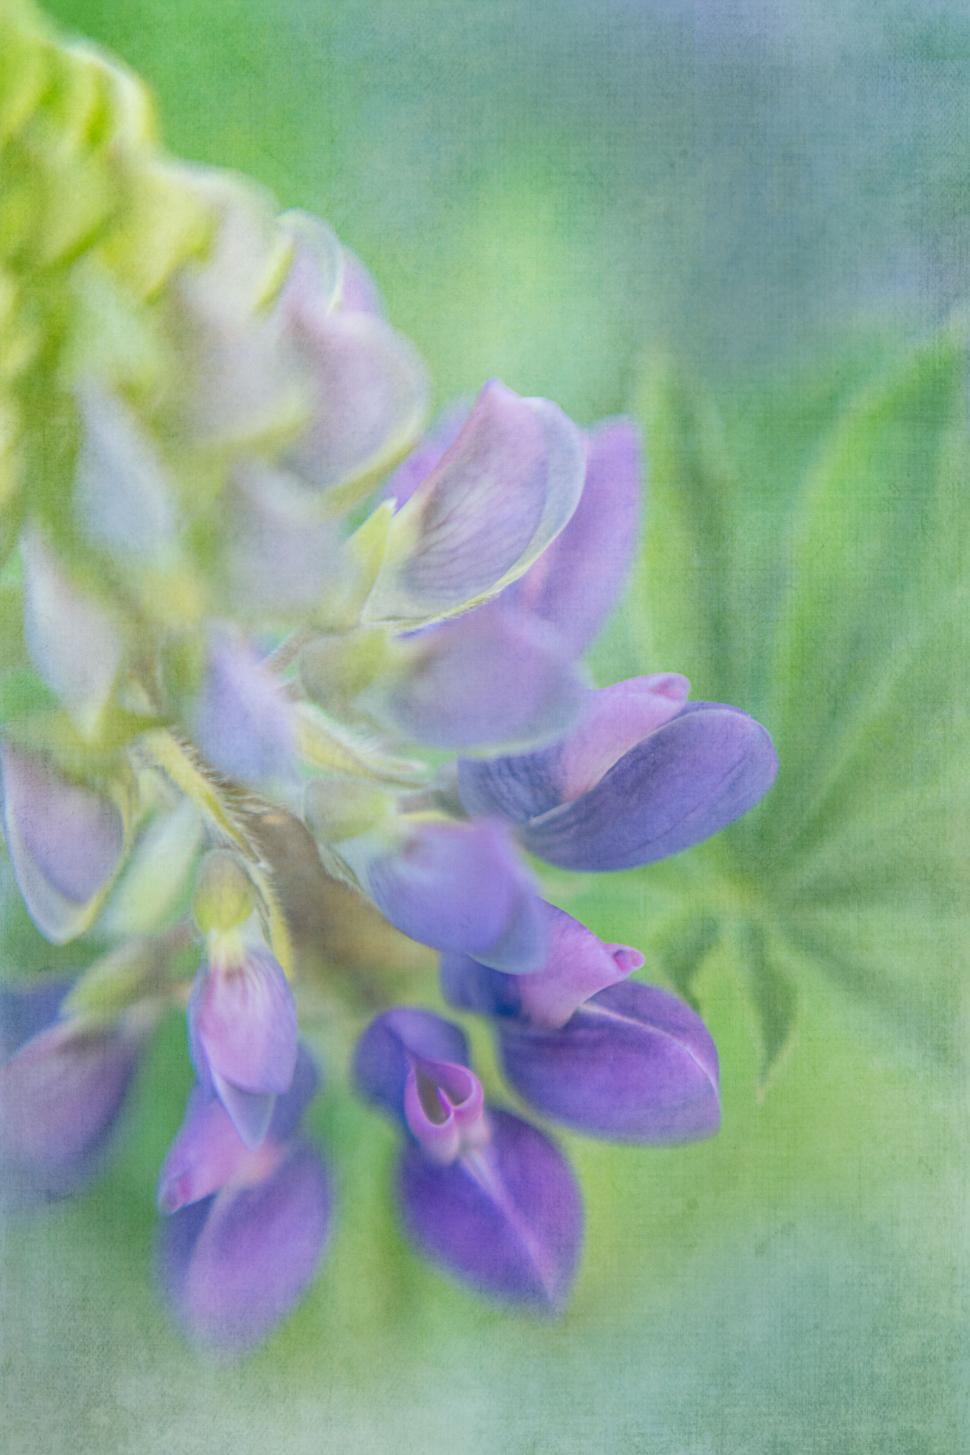 Free Image of Dreamy image of purplish lupine flowers 